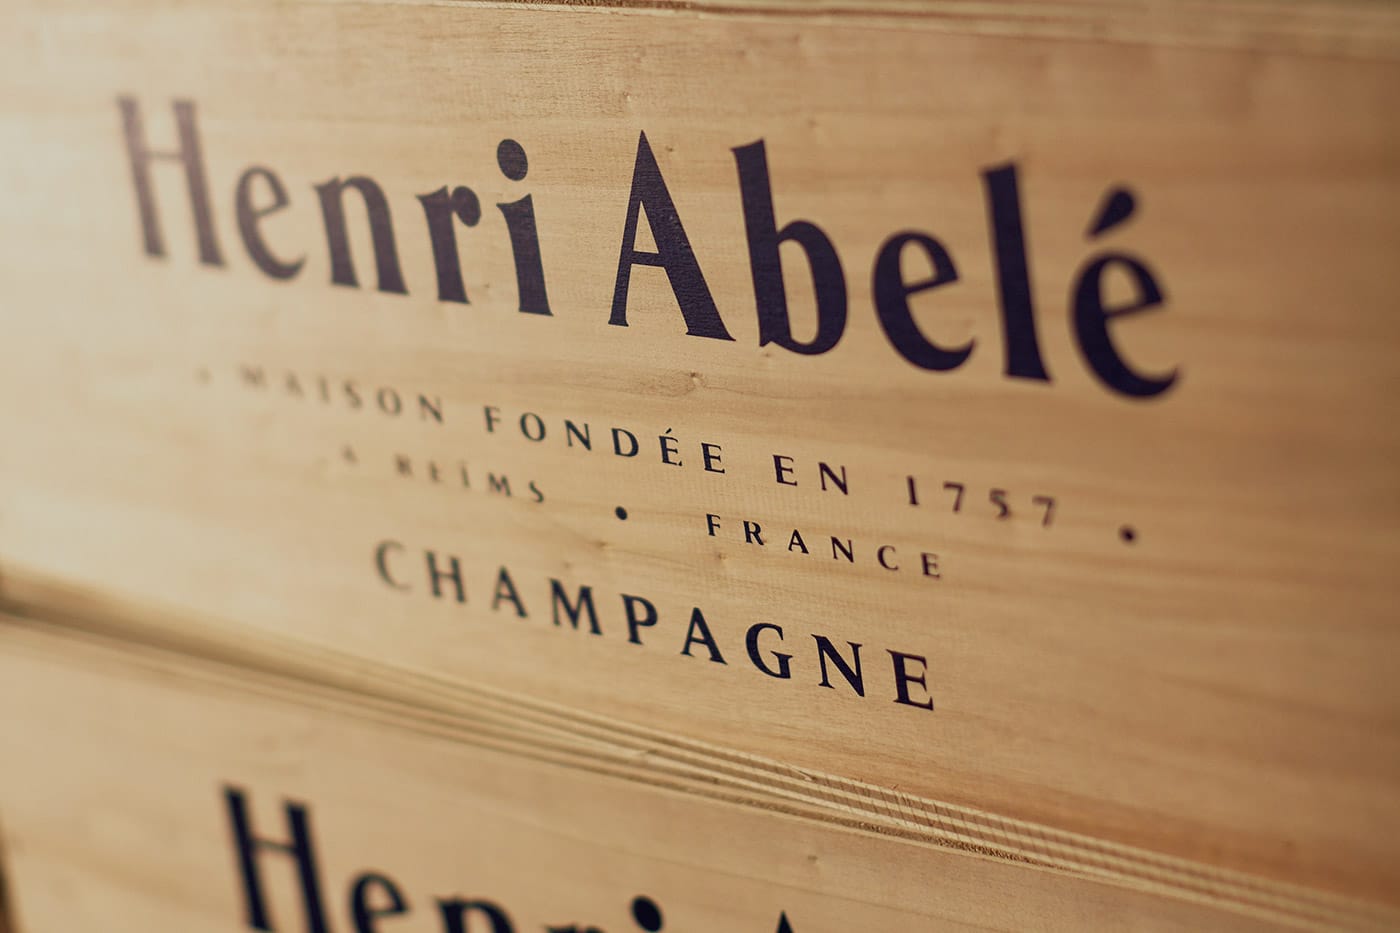 Scatola del vino Henri Abele Champagne